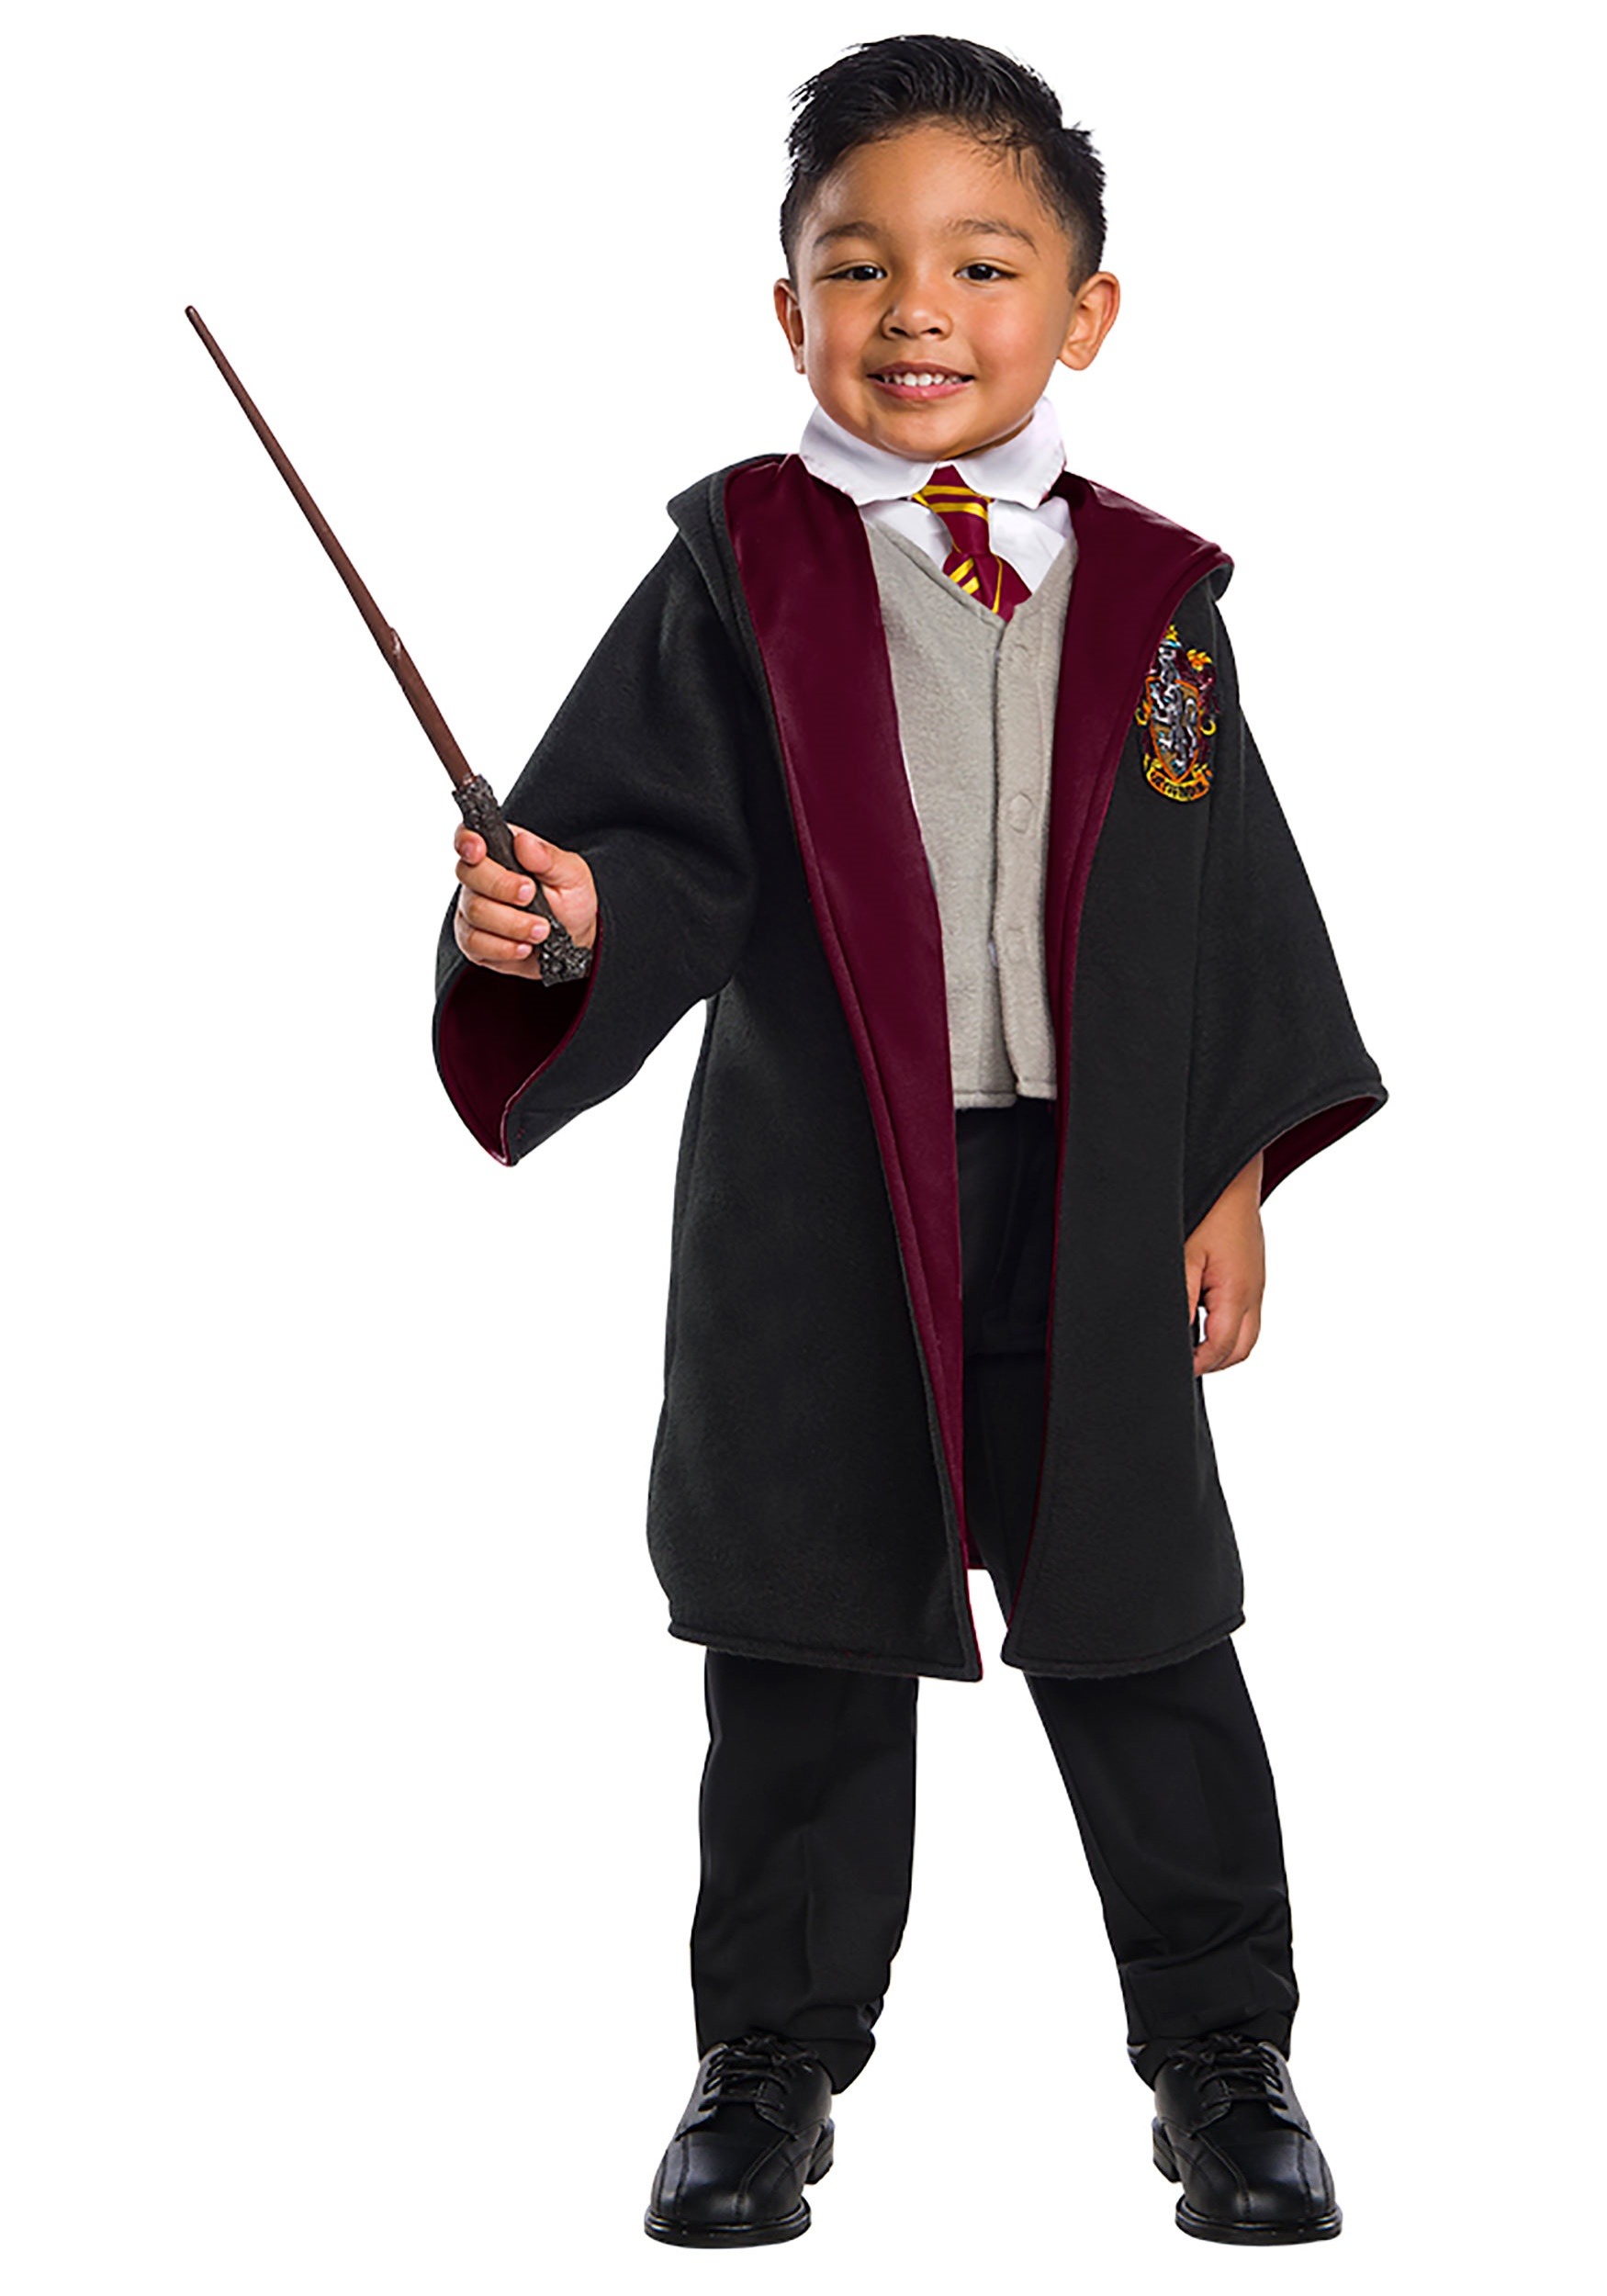 A Harry Potter Costume